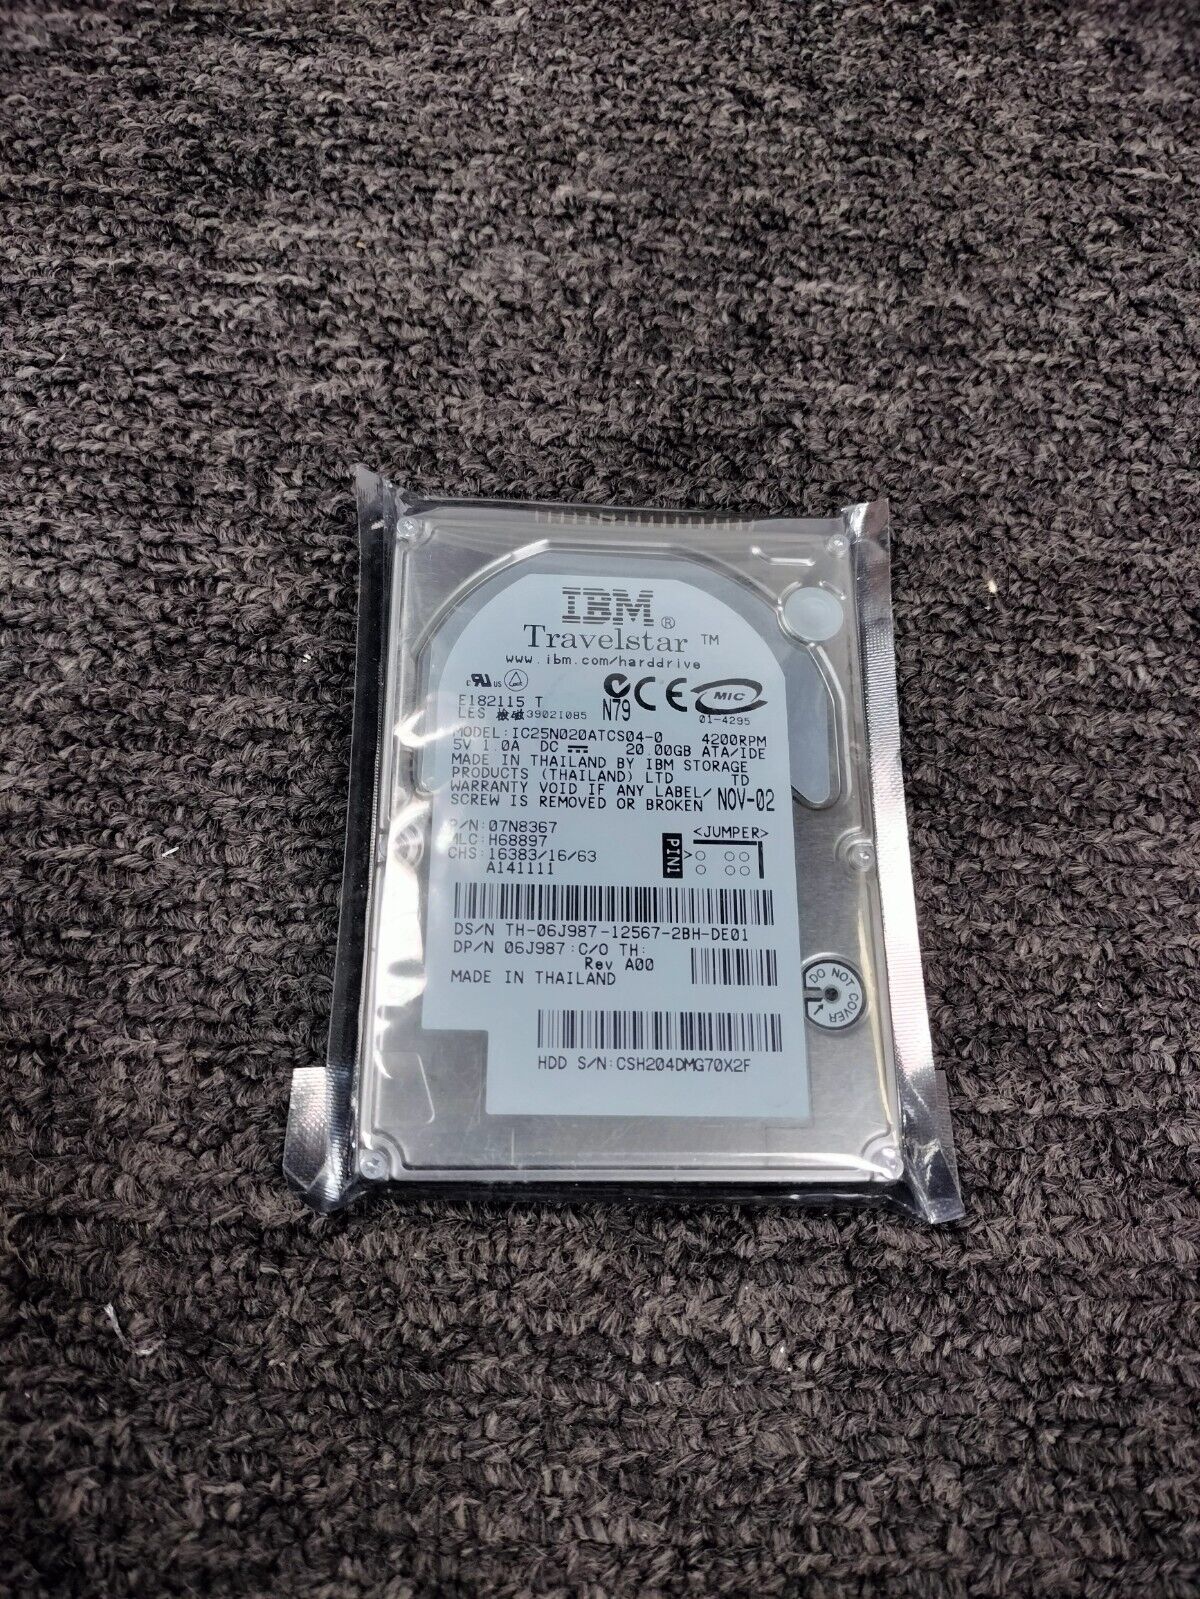 IBM TRAVELSTAR (IC25N020ATCS04-0) 20GB Hard Drive (P/N:07N8367)